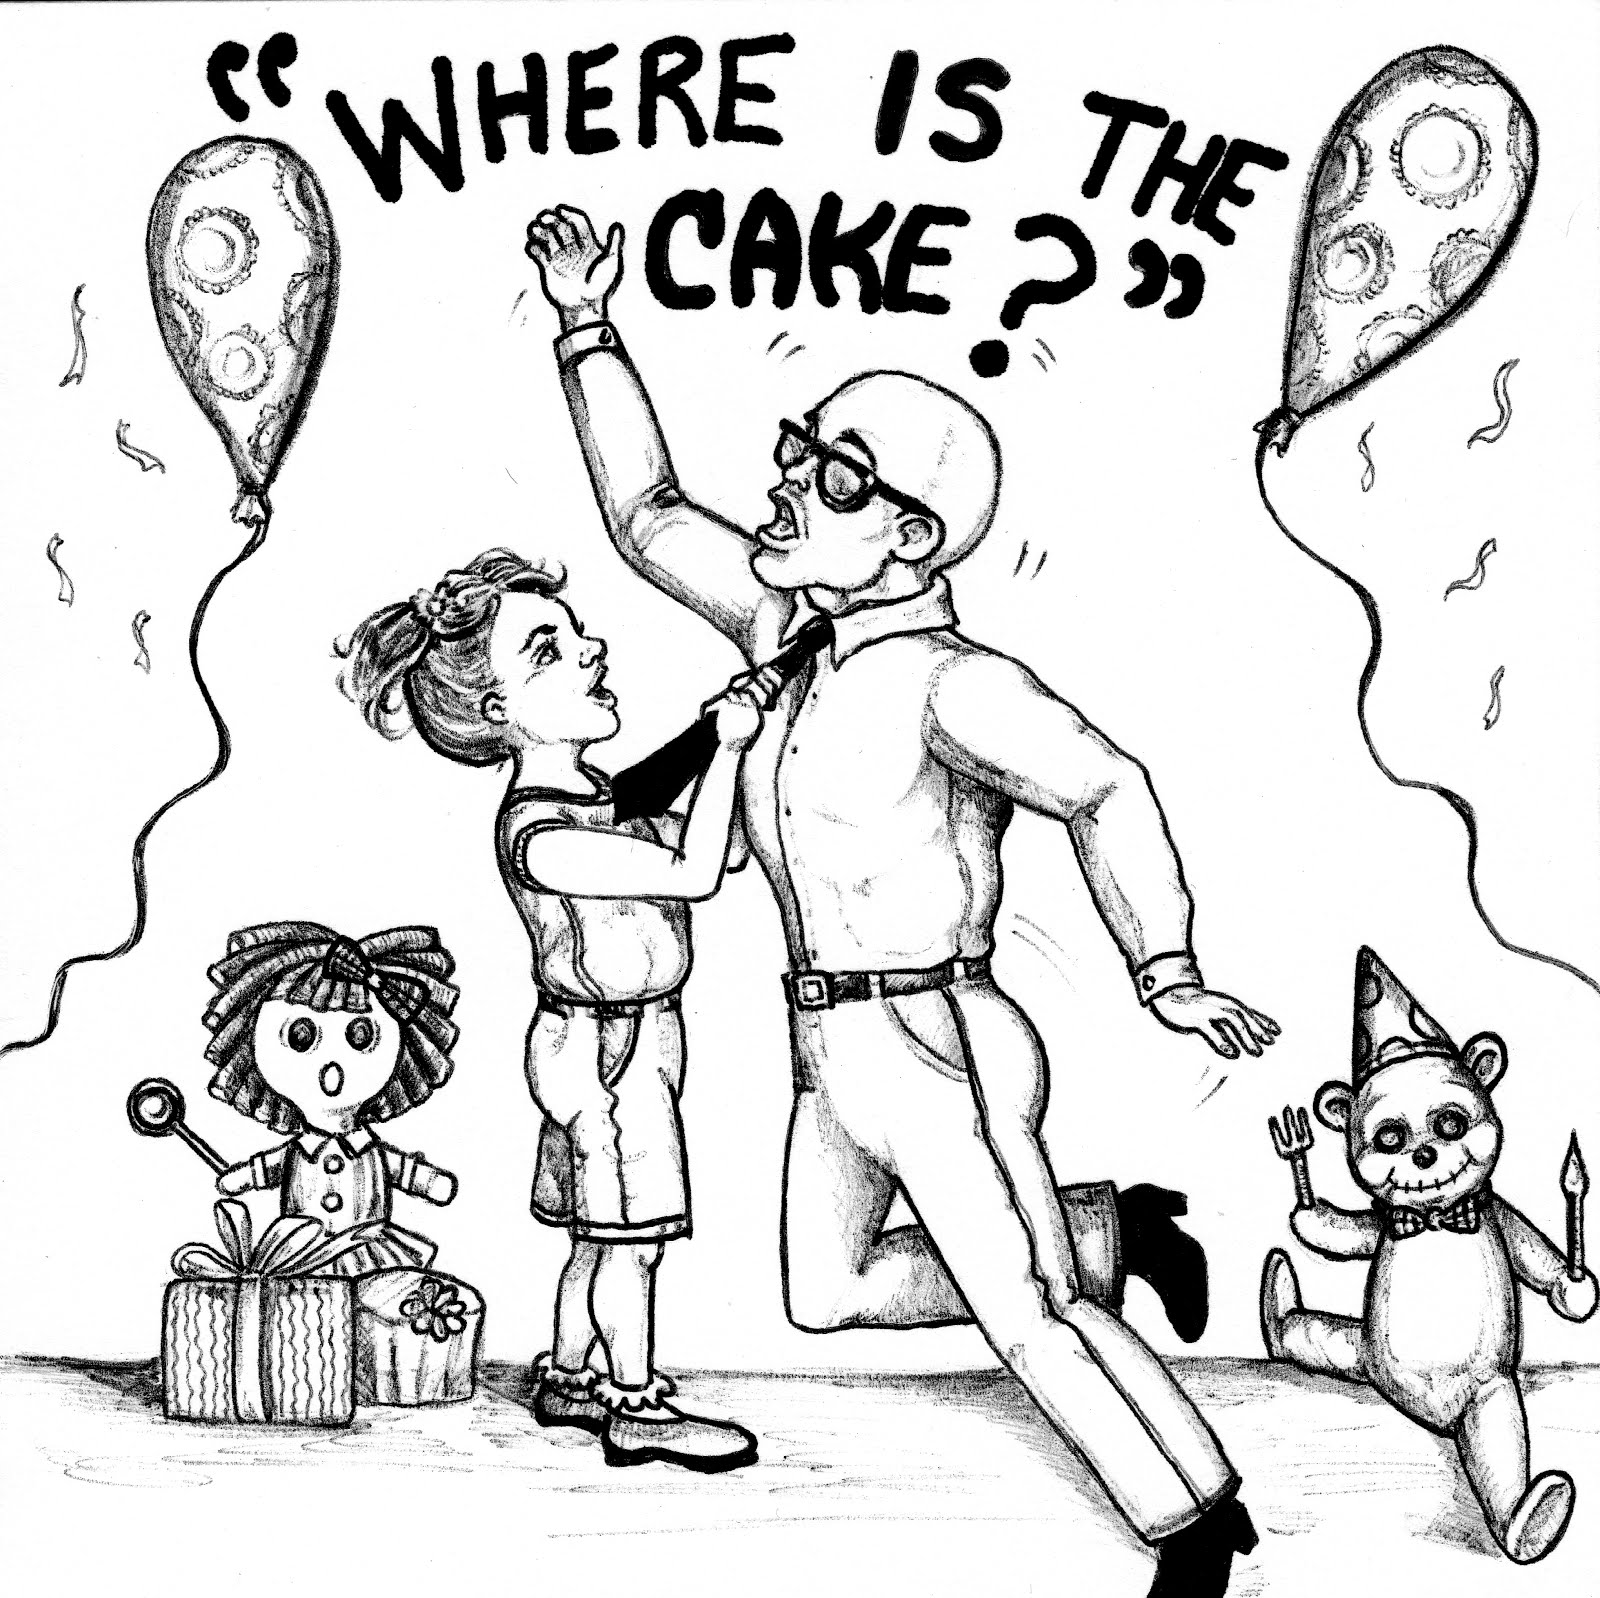 Where's the cake?